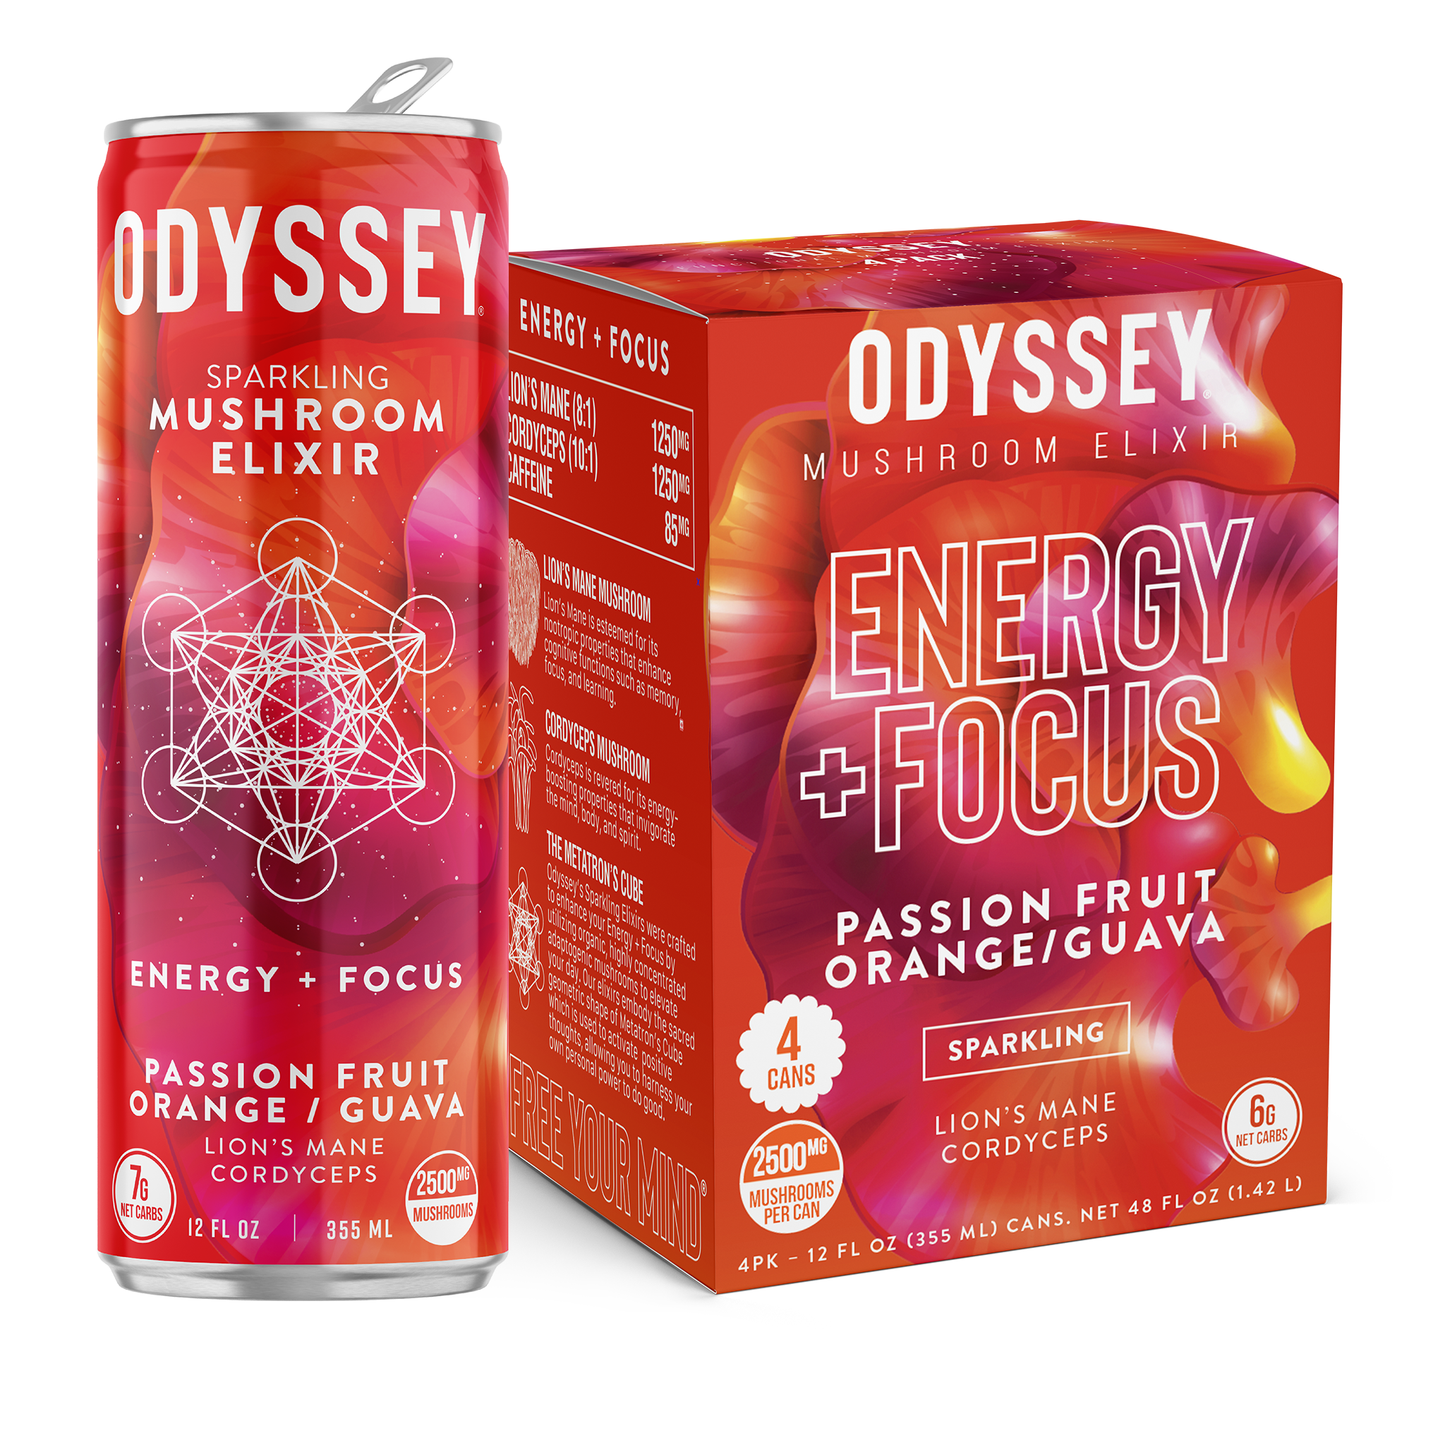 OdysseyElixir - ENERGY + FOCUS - PASSION FRUIT, ORANGE, GUAVA - 12-pack